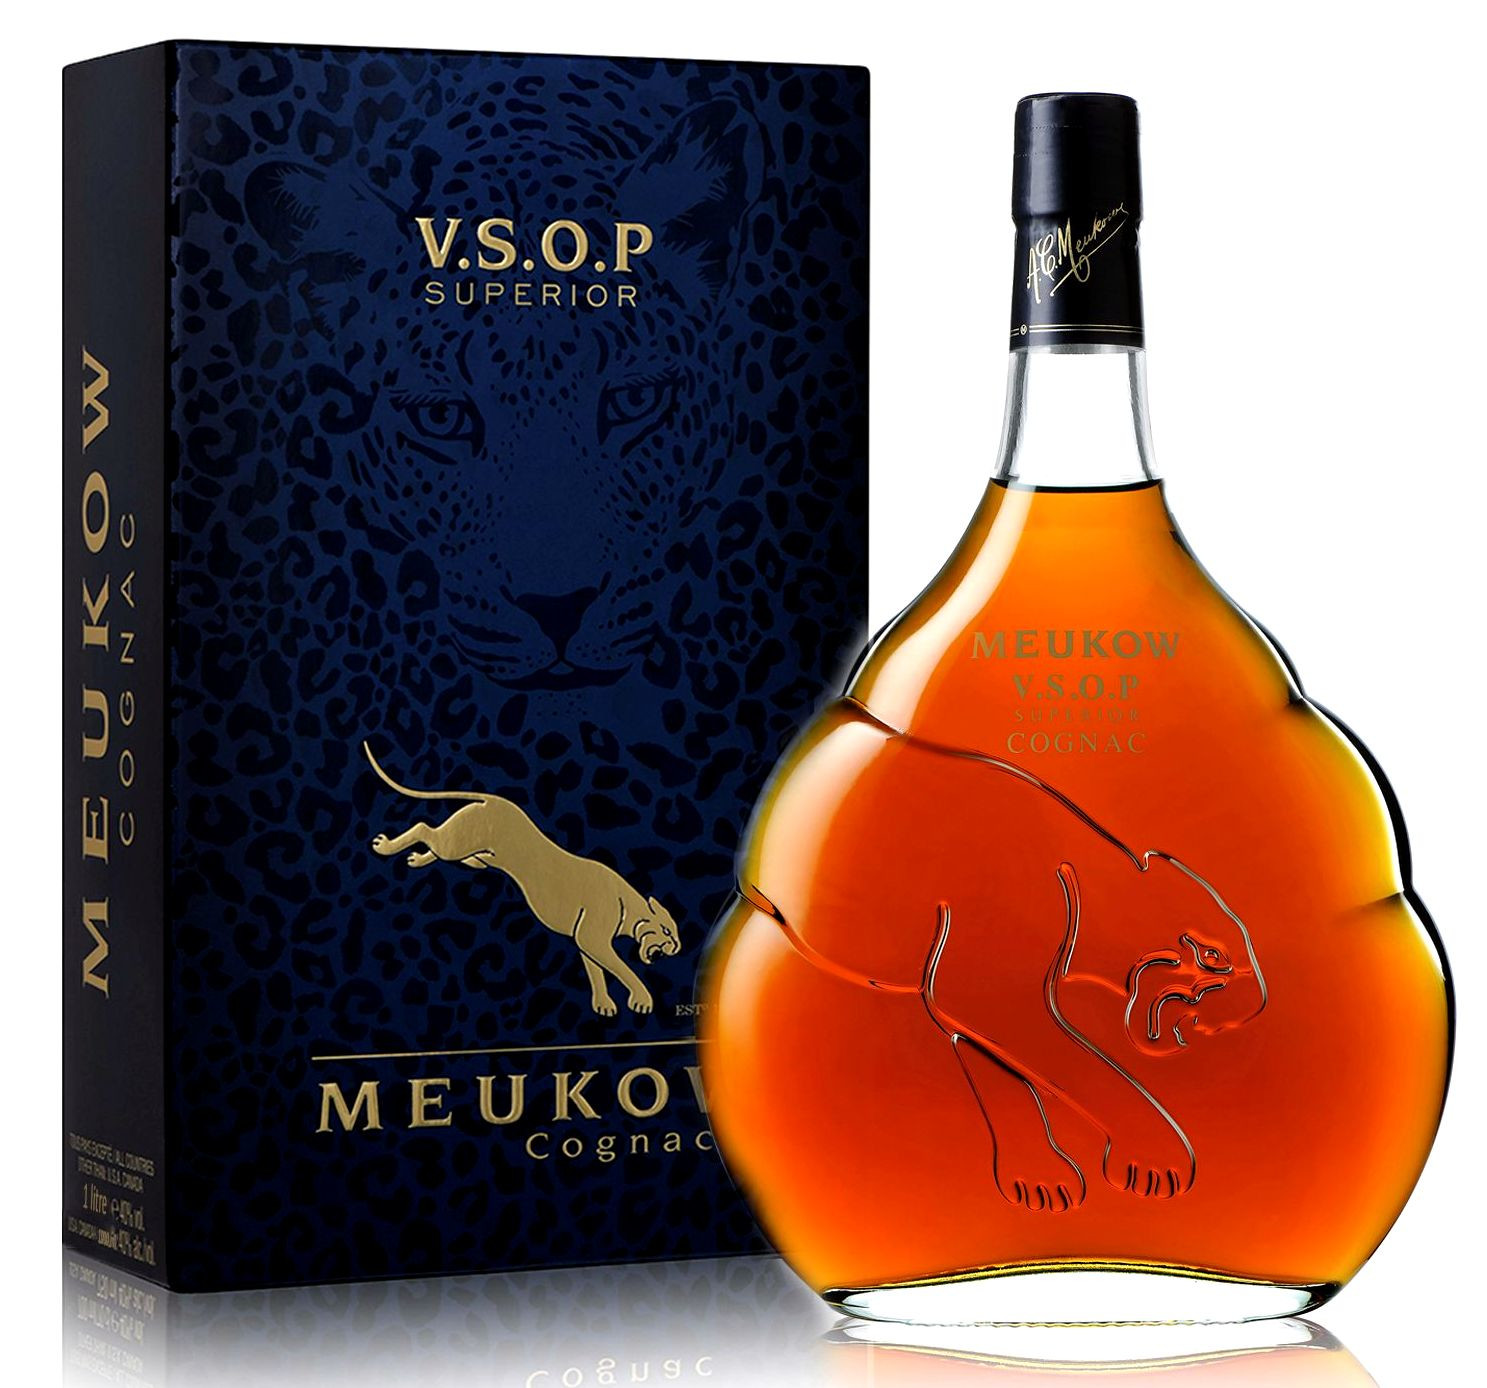 Meukow Cognac VSOP Superior 0,7l díszdobozos